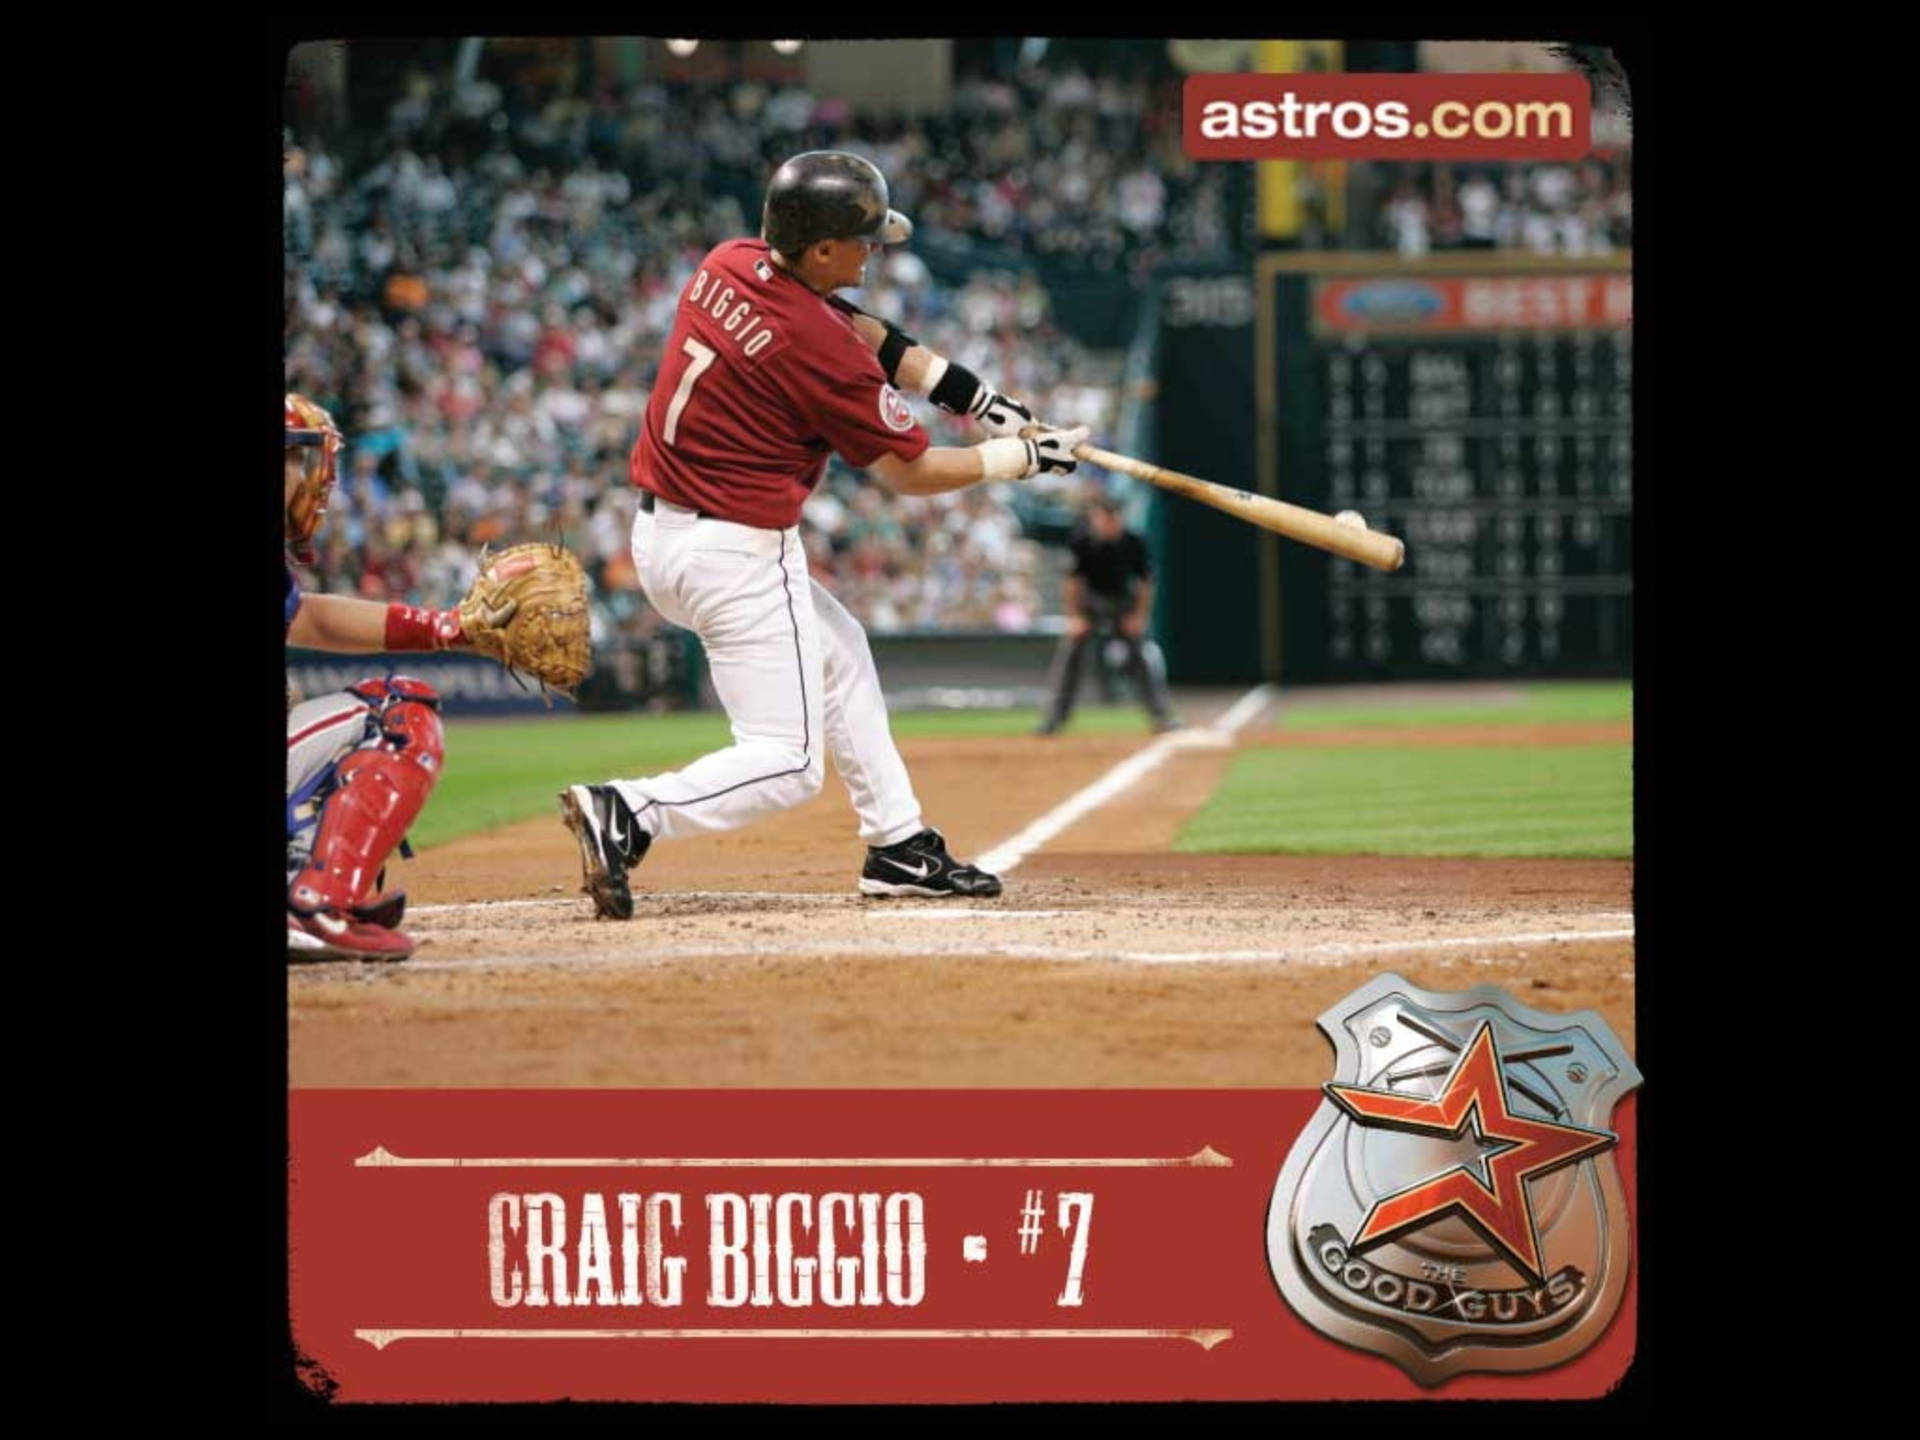 Craig Biggio Baseball Poster Background